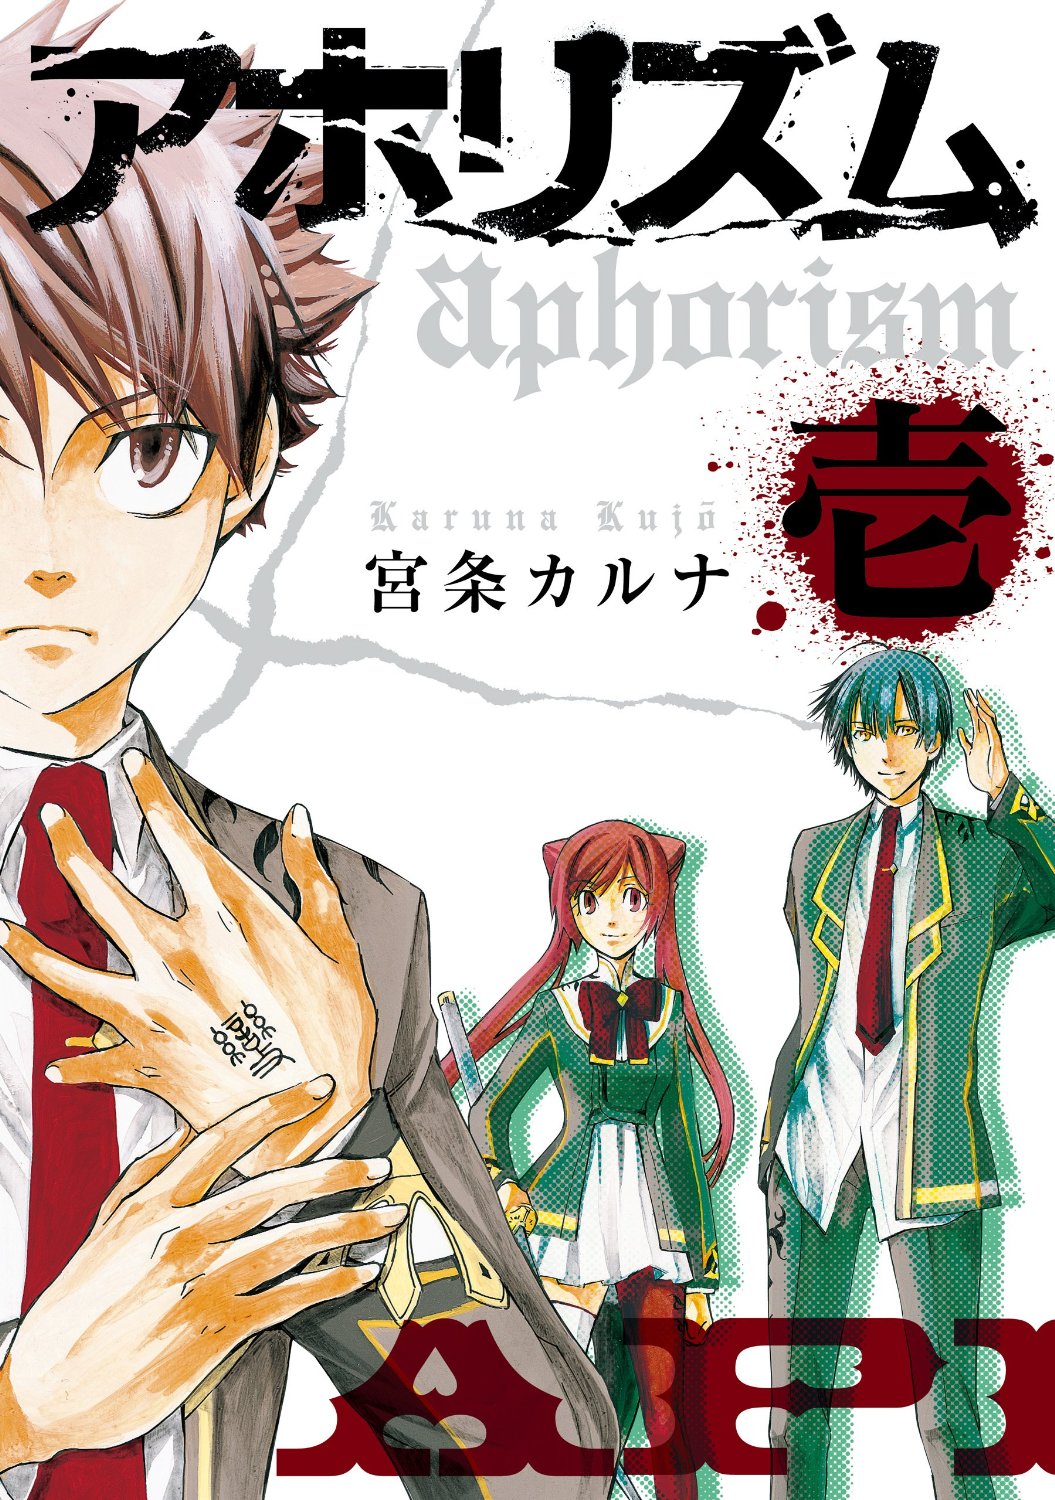 Yen Press Licenses Highschool of the Dead Manga